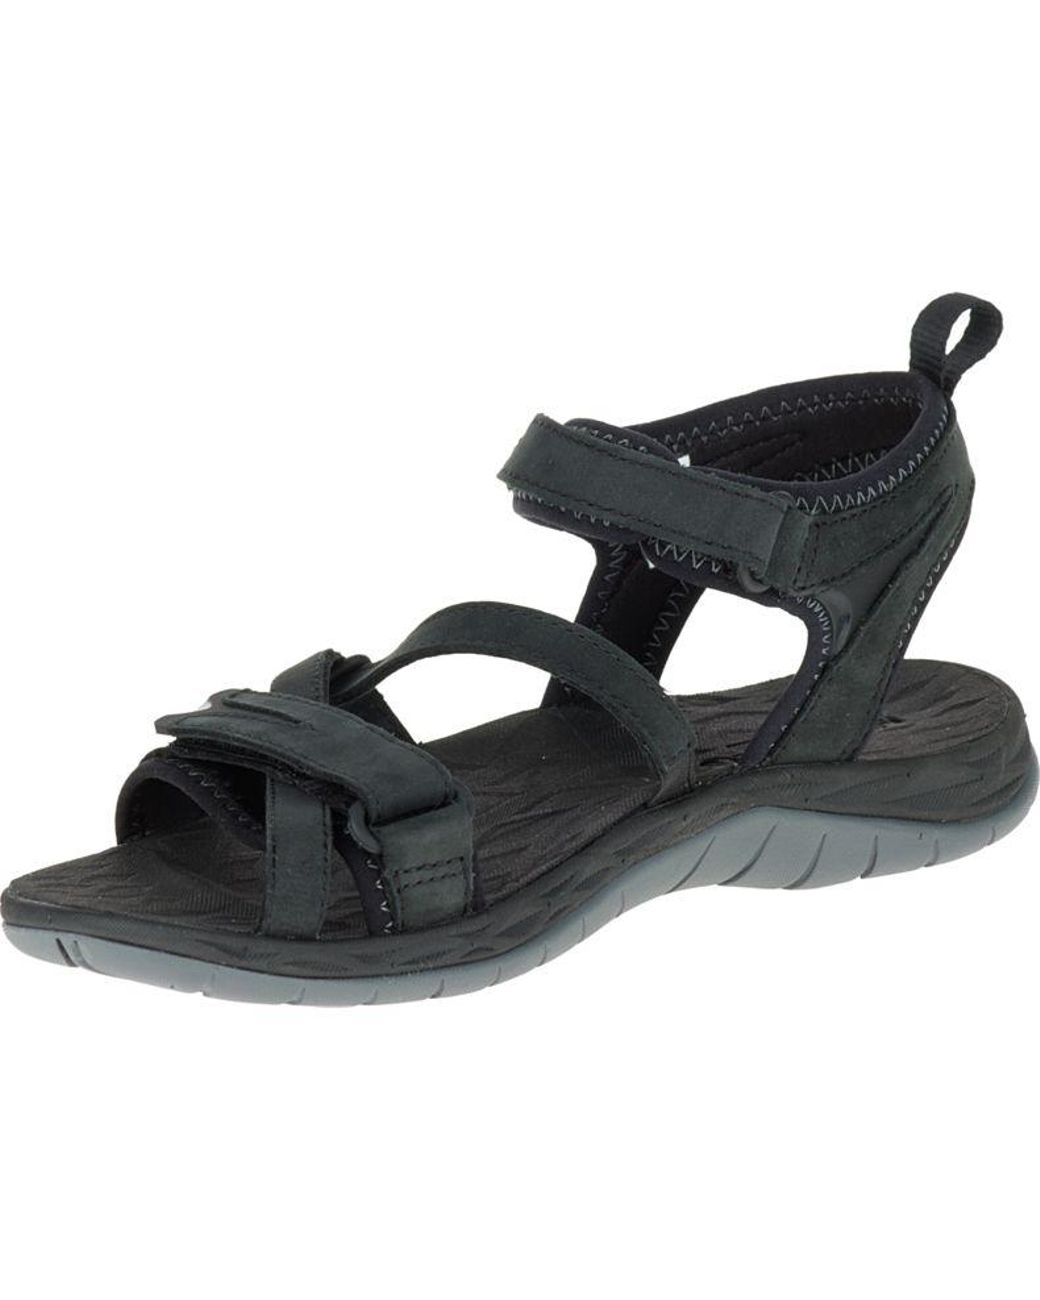 Merrell Siren Strap Q2 Waterproof Leather Walking Sandals in Black | Lyst